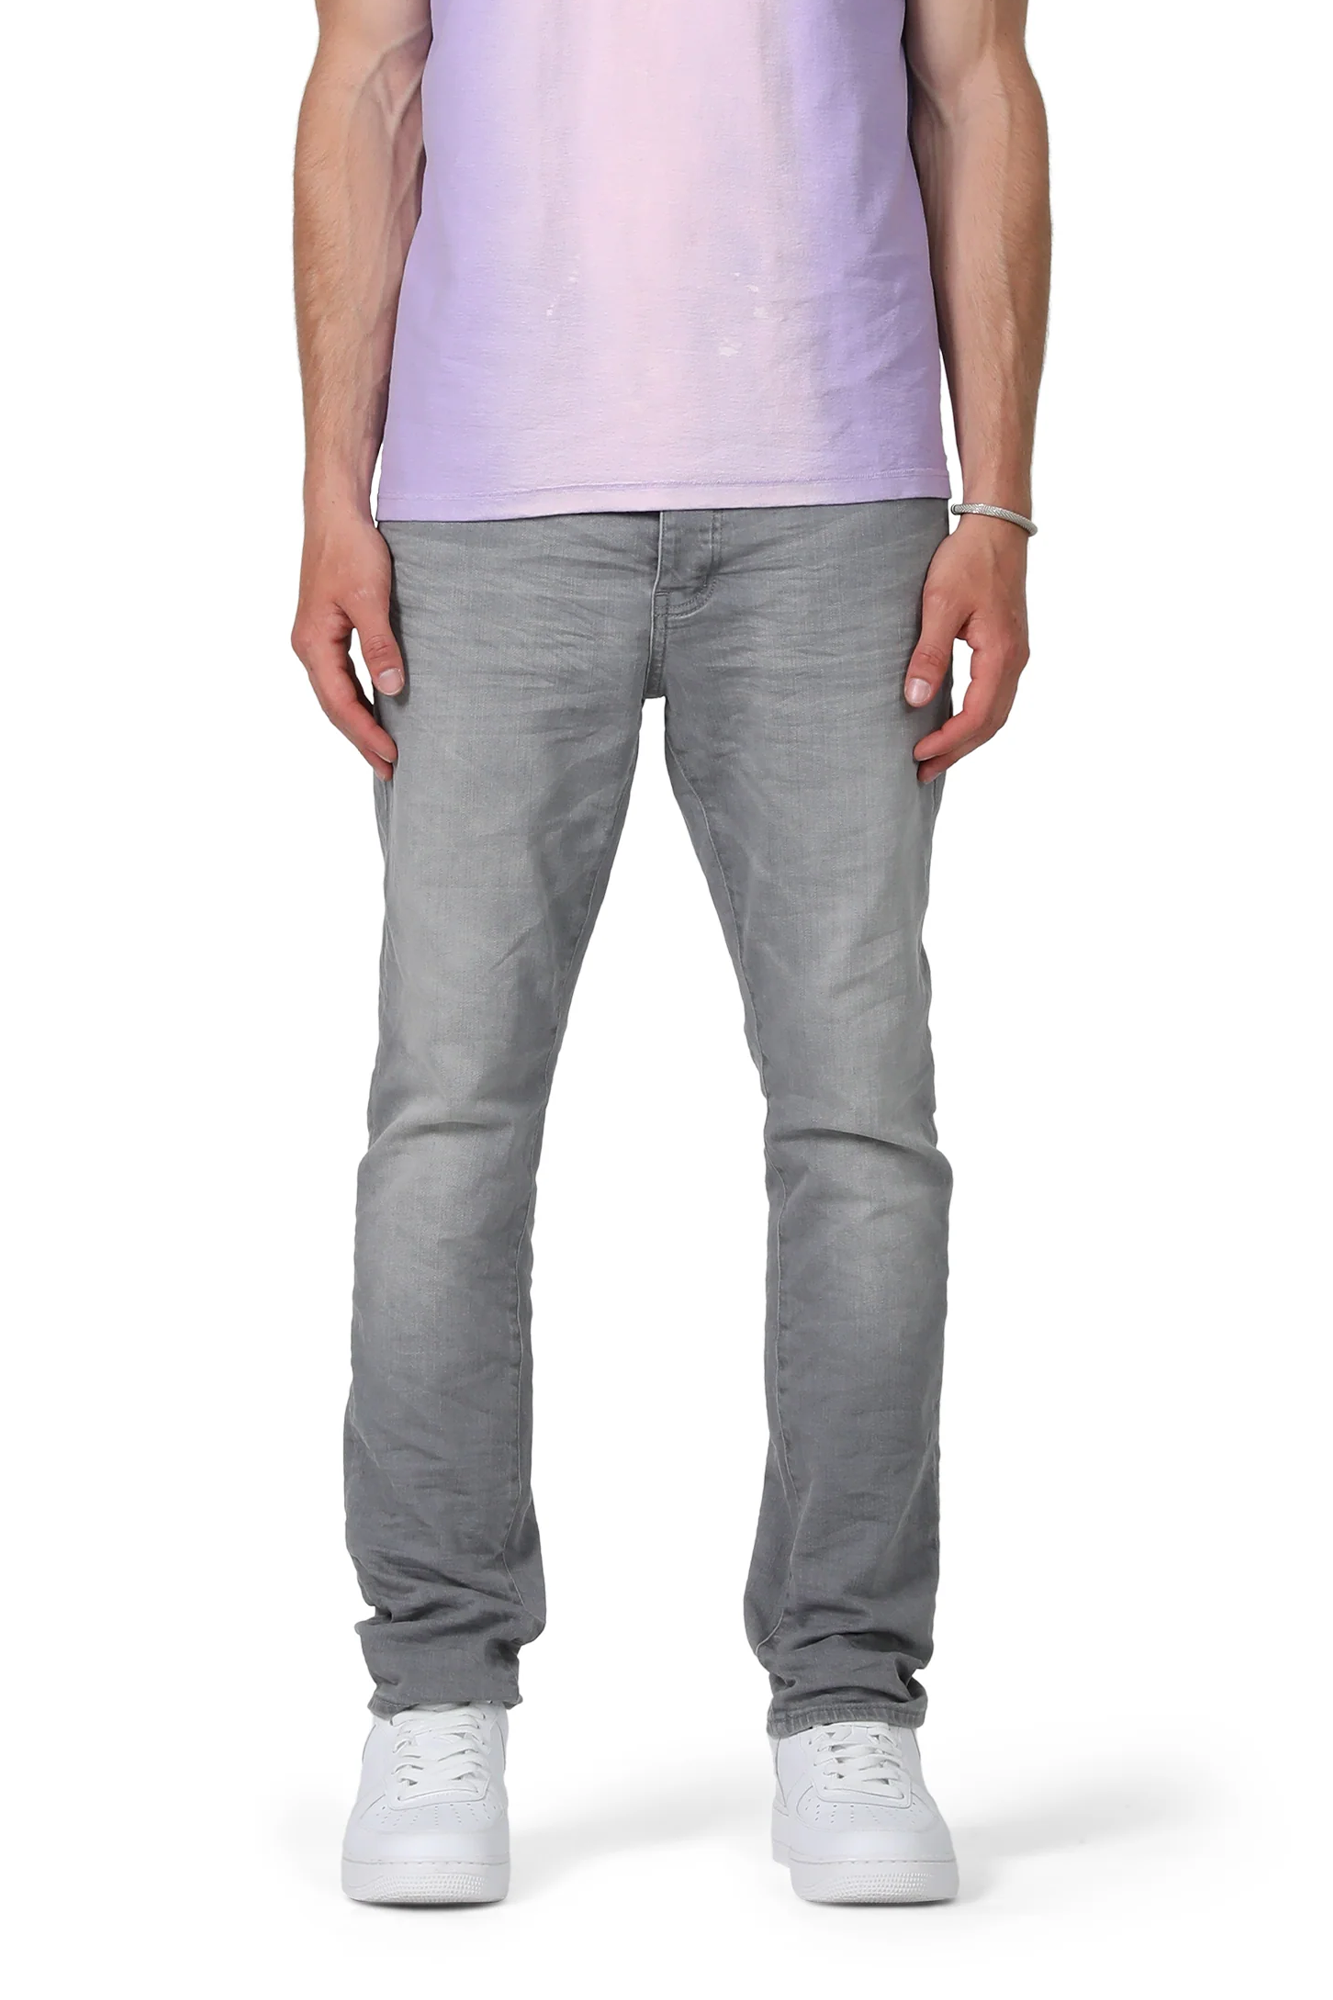 Best Price* Purple Brand Jeans 'Smoke Grey Distressed' Sz 28 Slim